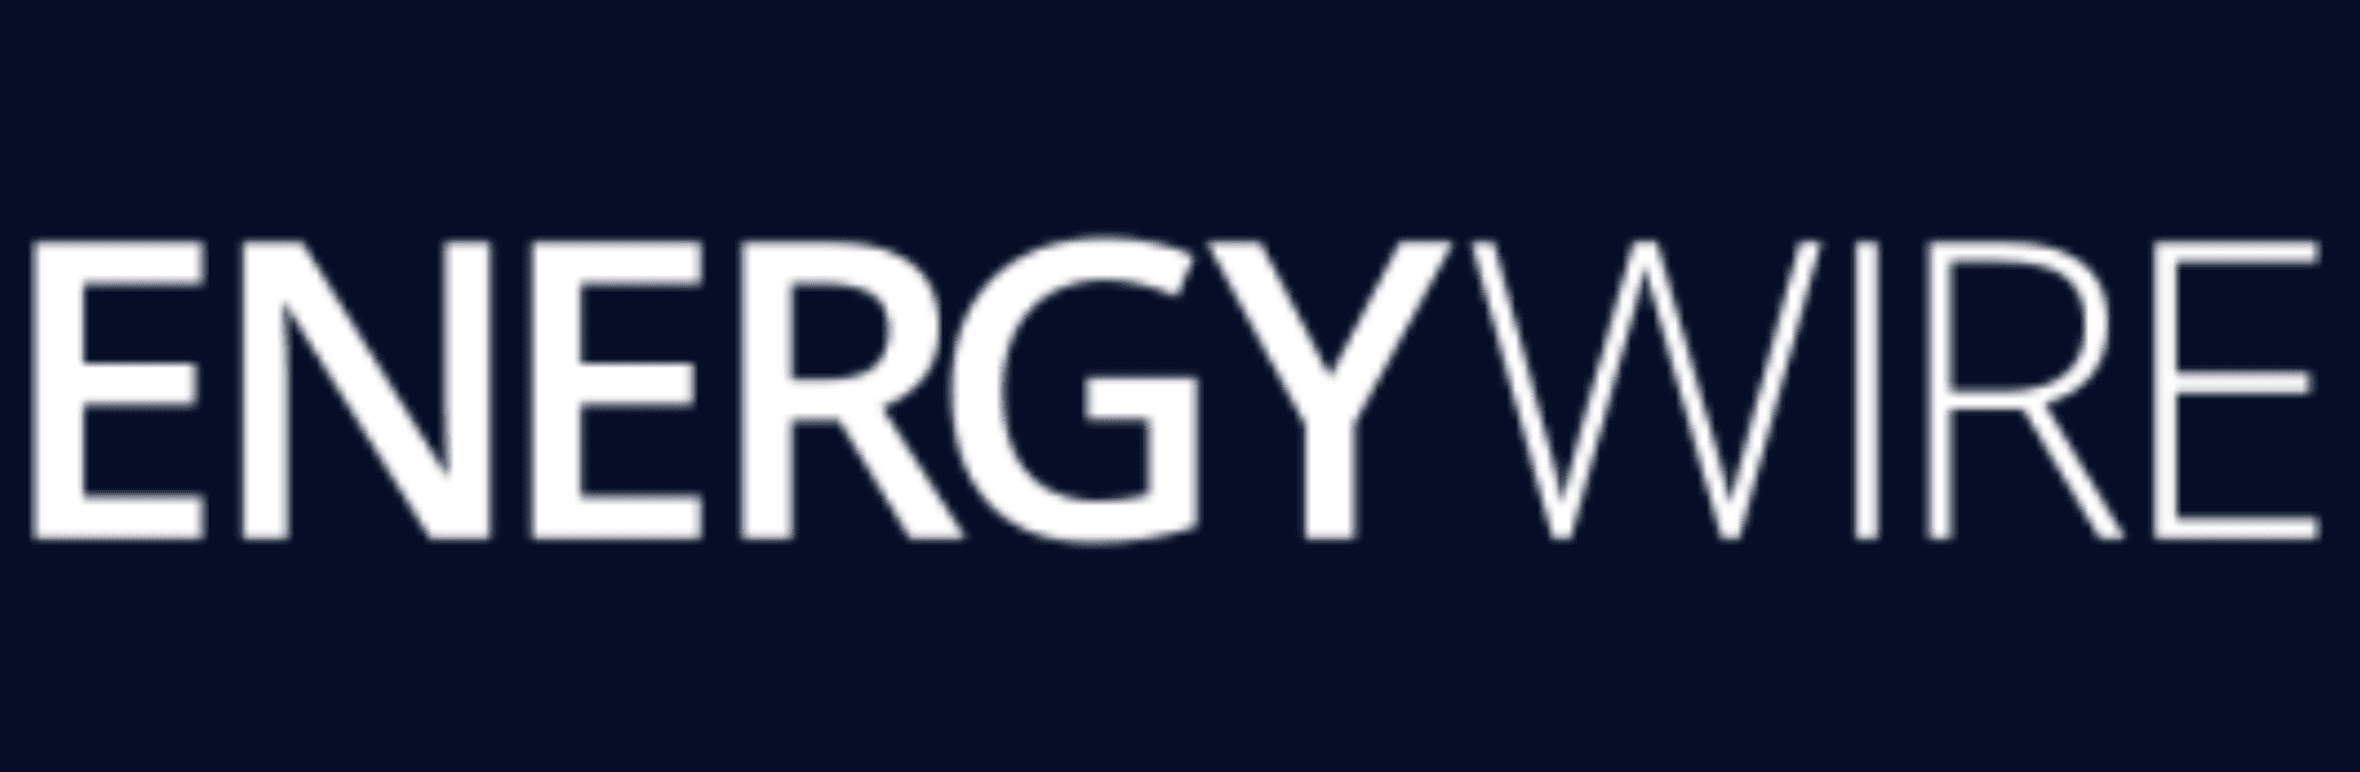 ENERGYWIRE logo